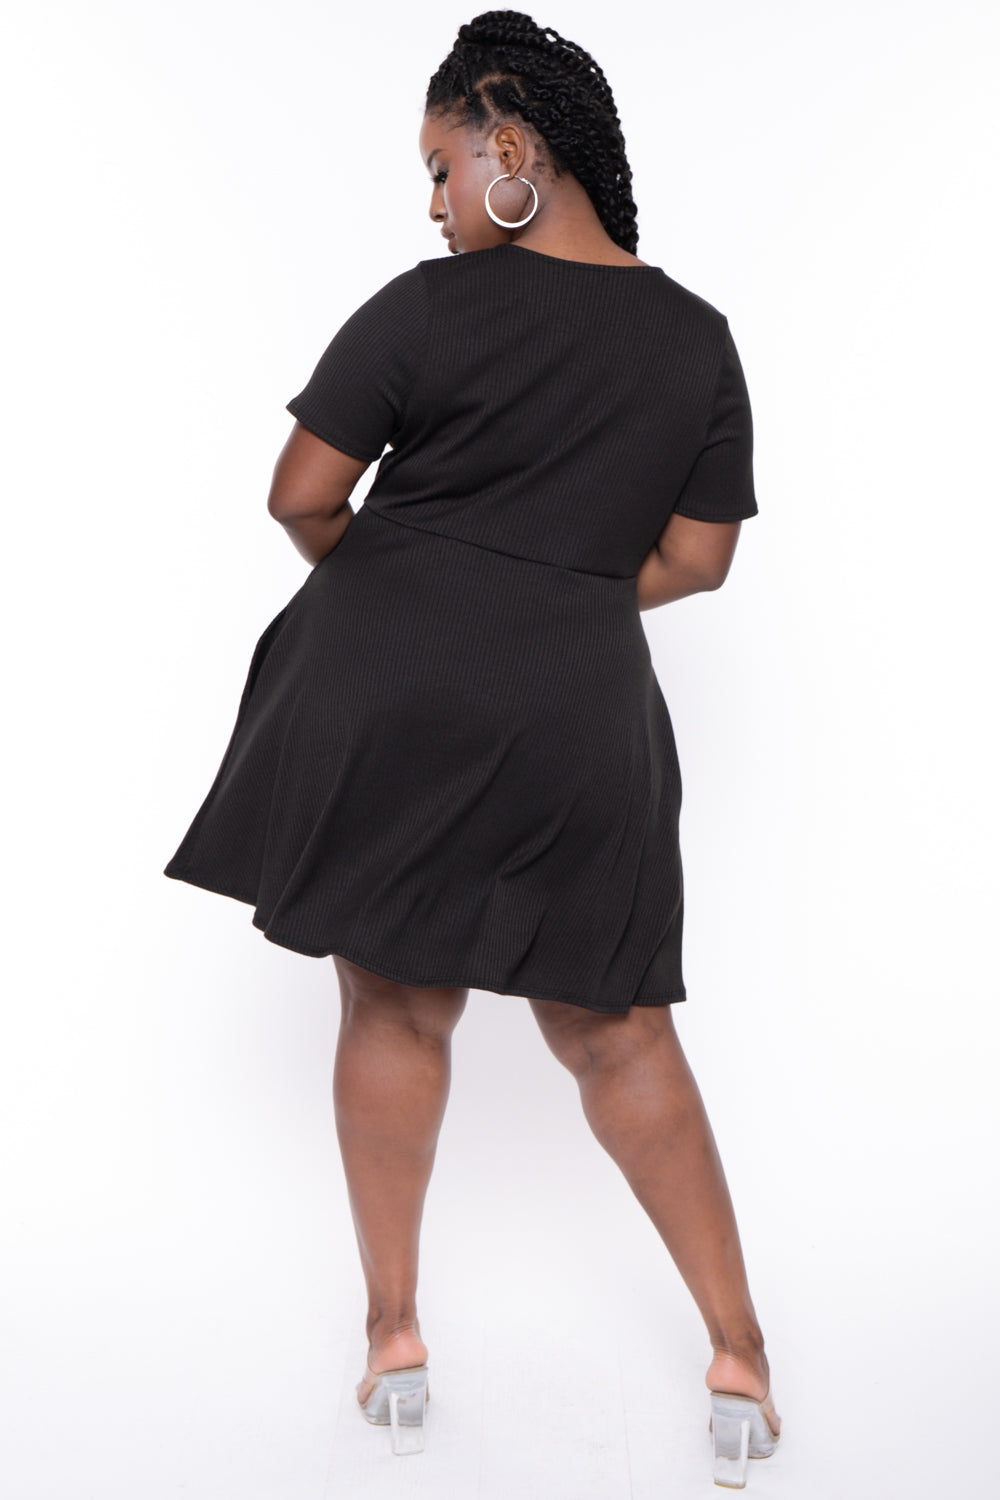 Curvy Sense Dresses Plus Size Ellie Flare Dress - Black